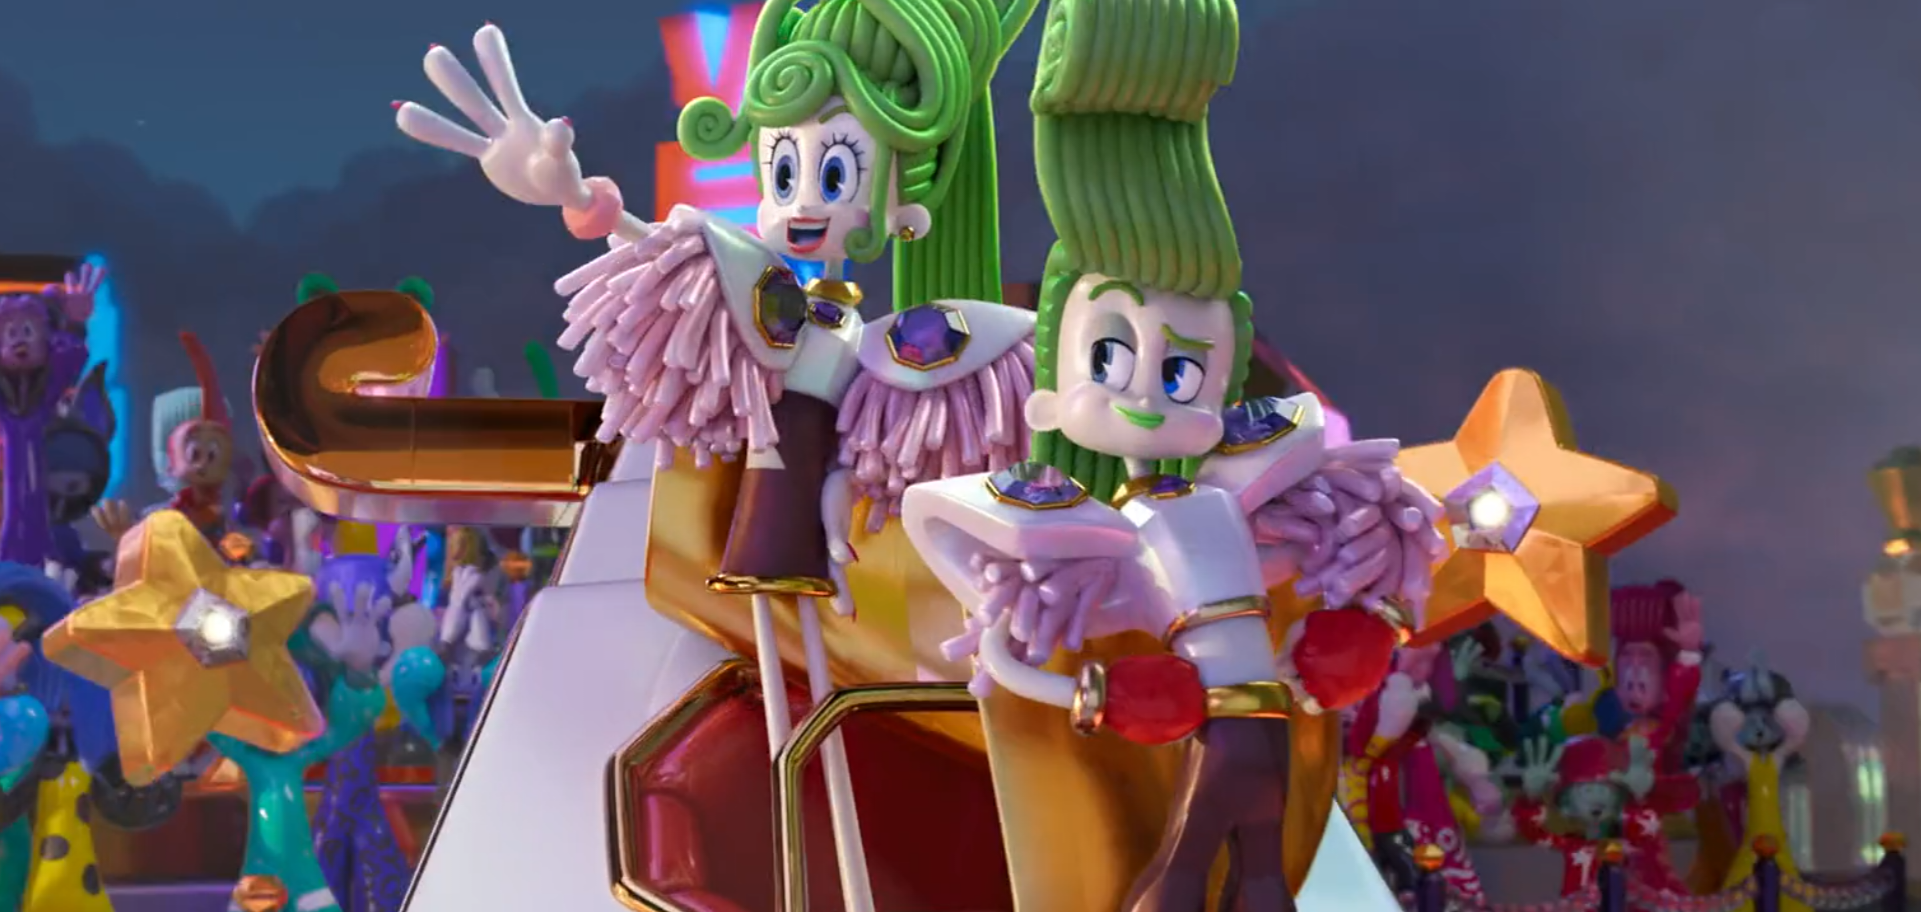  Trolls Band Together DreamWorks Velvet and Veneer